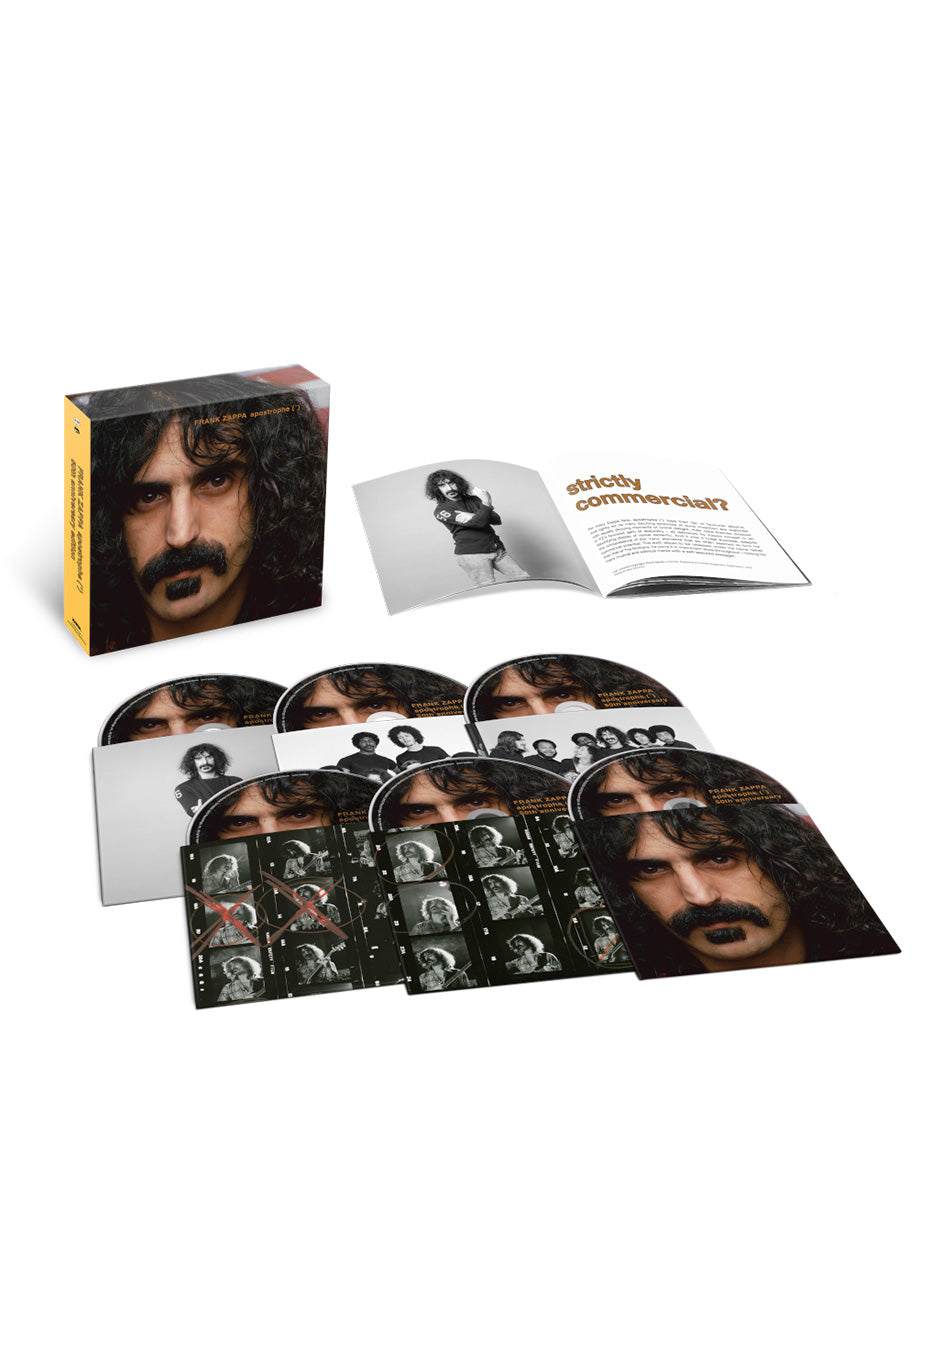 Frank Zappa - Apostrophe (') Ltd. Edition - CD Box Set | Neutral-Image